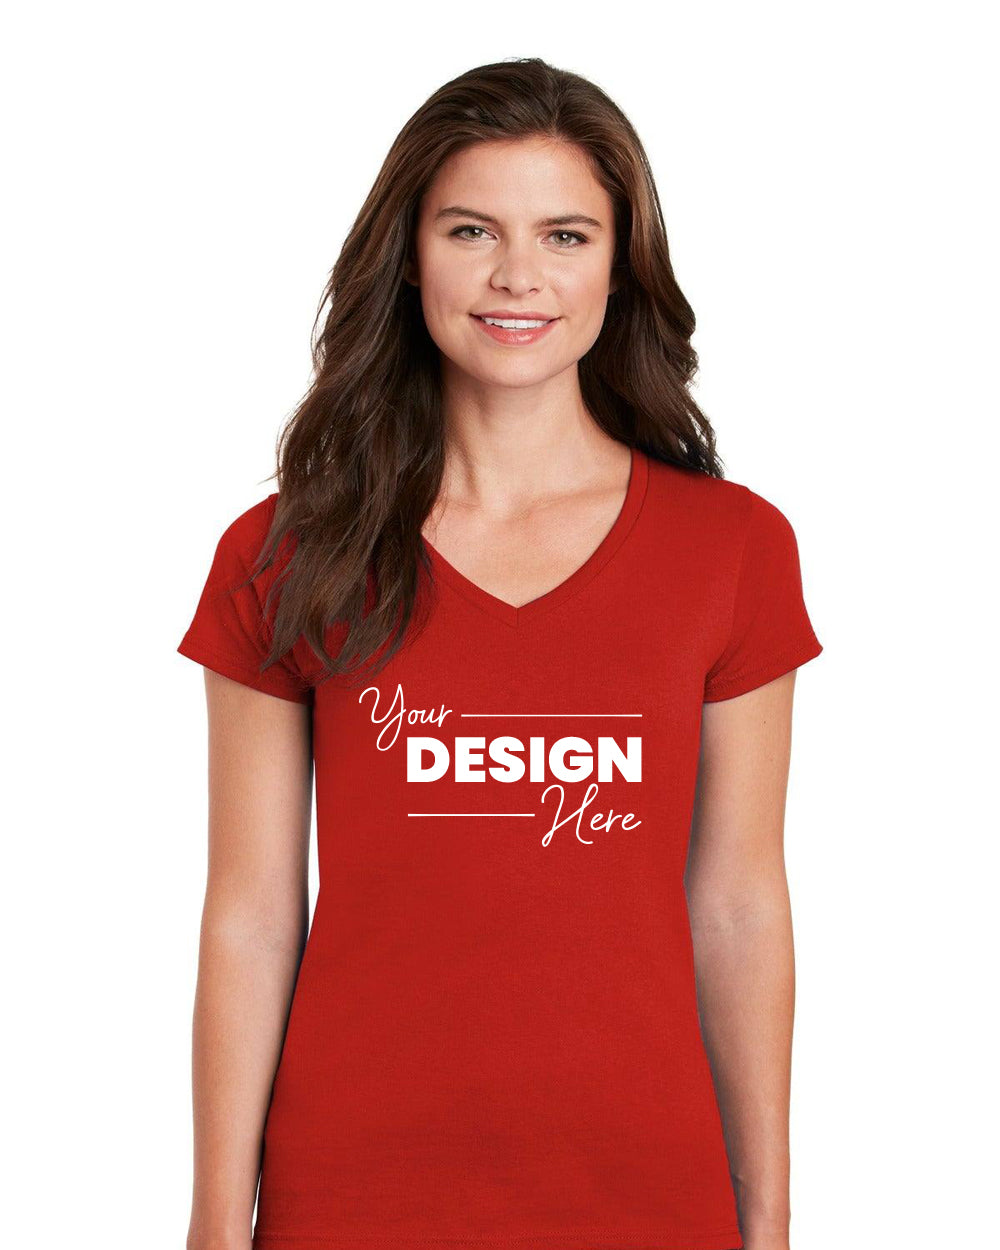 Design Bulk Custom Women's T-Shirts Online at Kodiak Wholesale